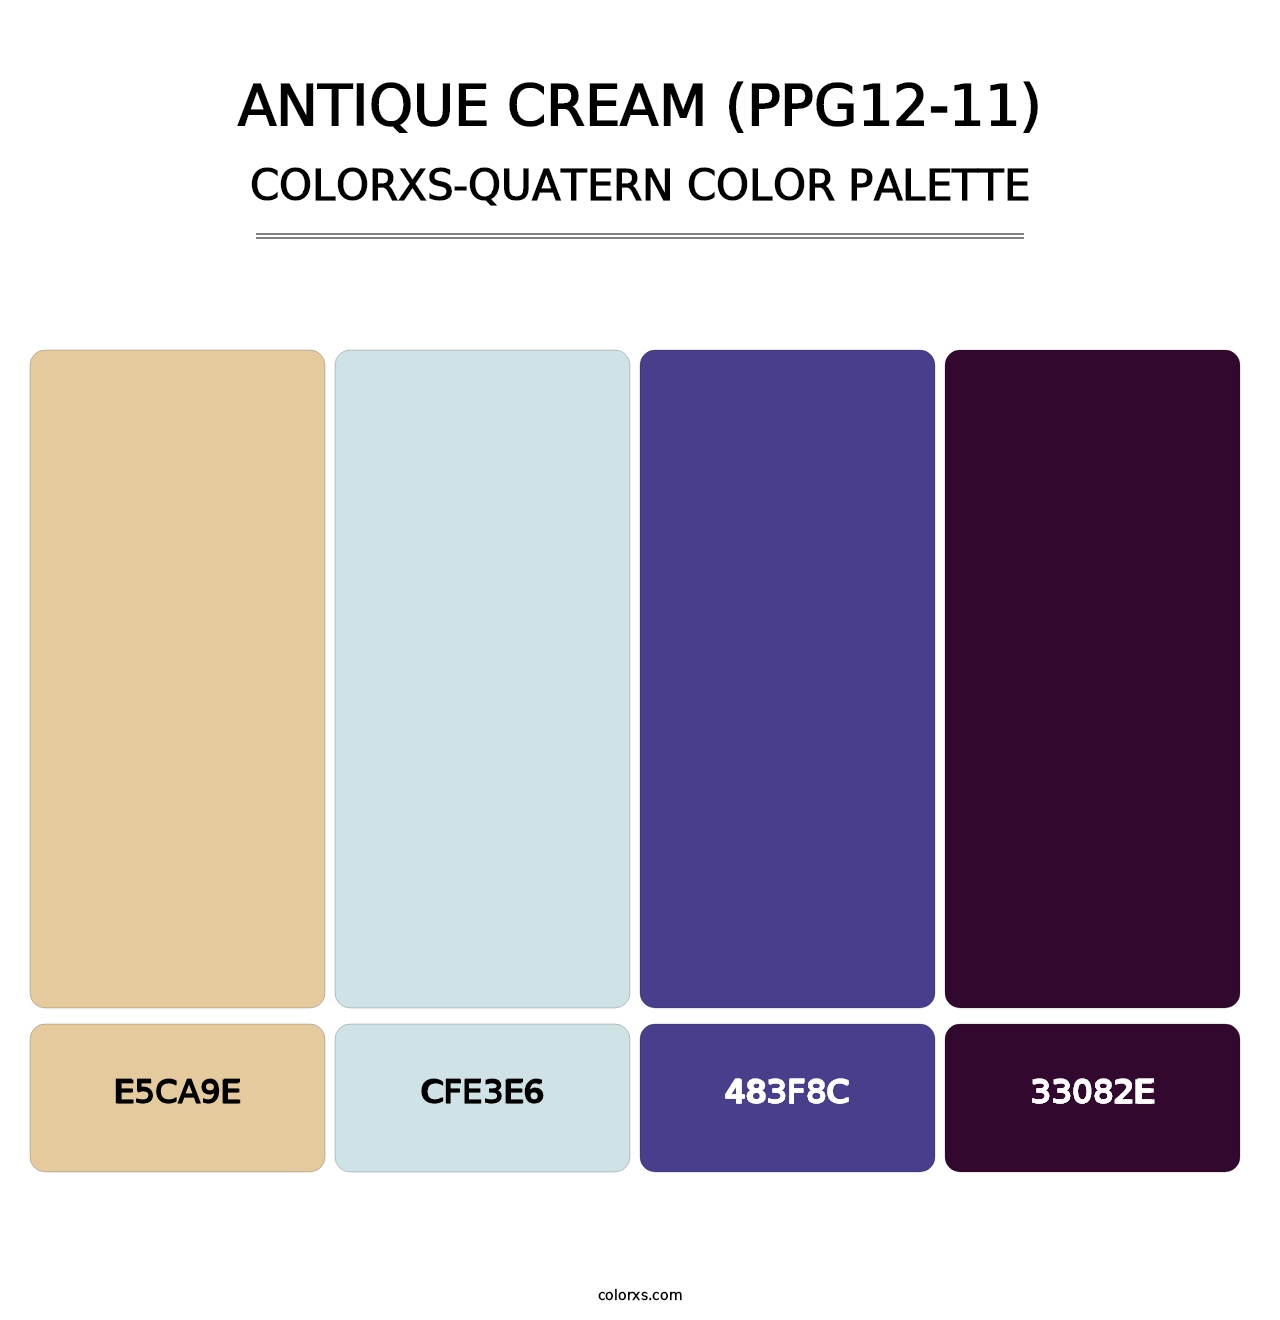 Antique Cream (PPG12-11) - Colorxs Quatern Palette